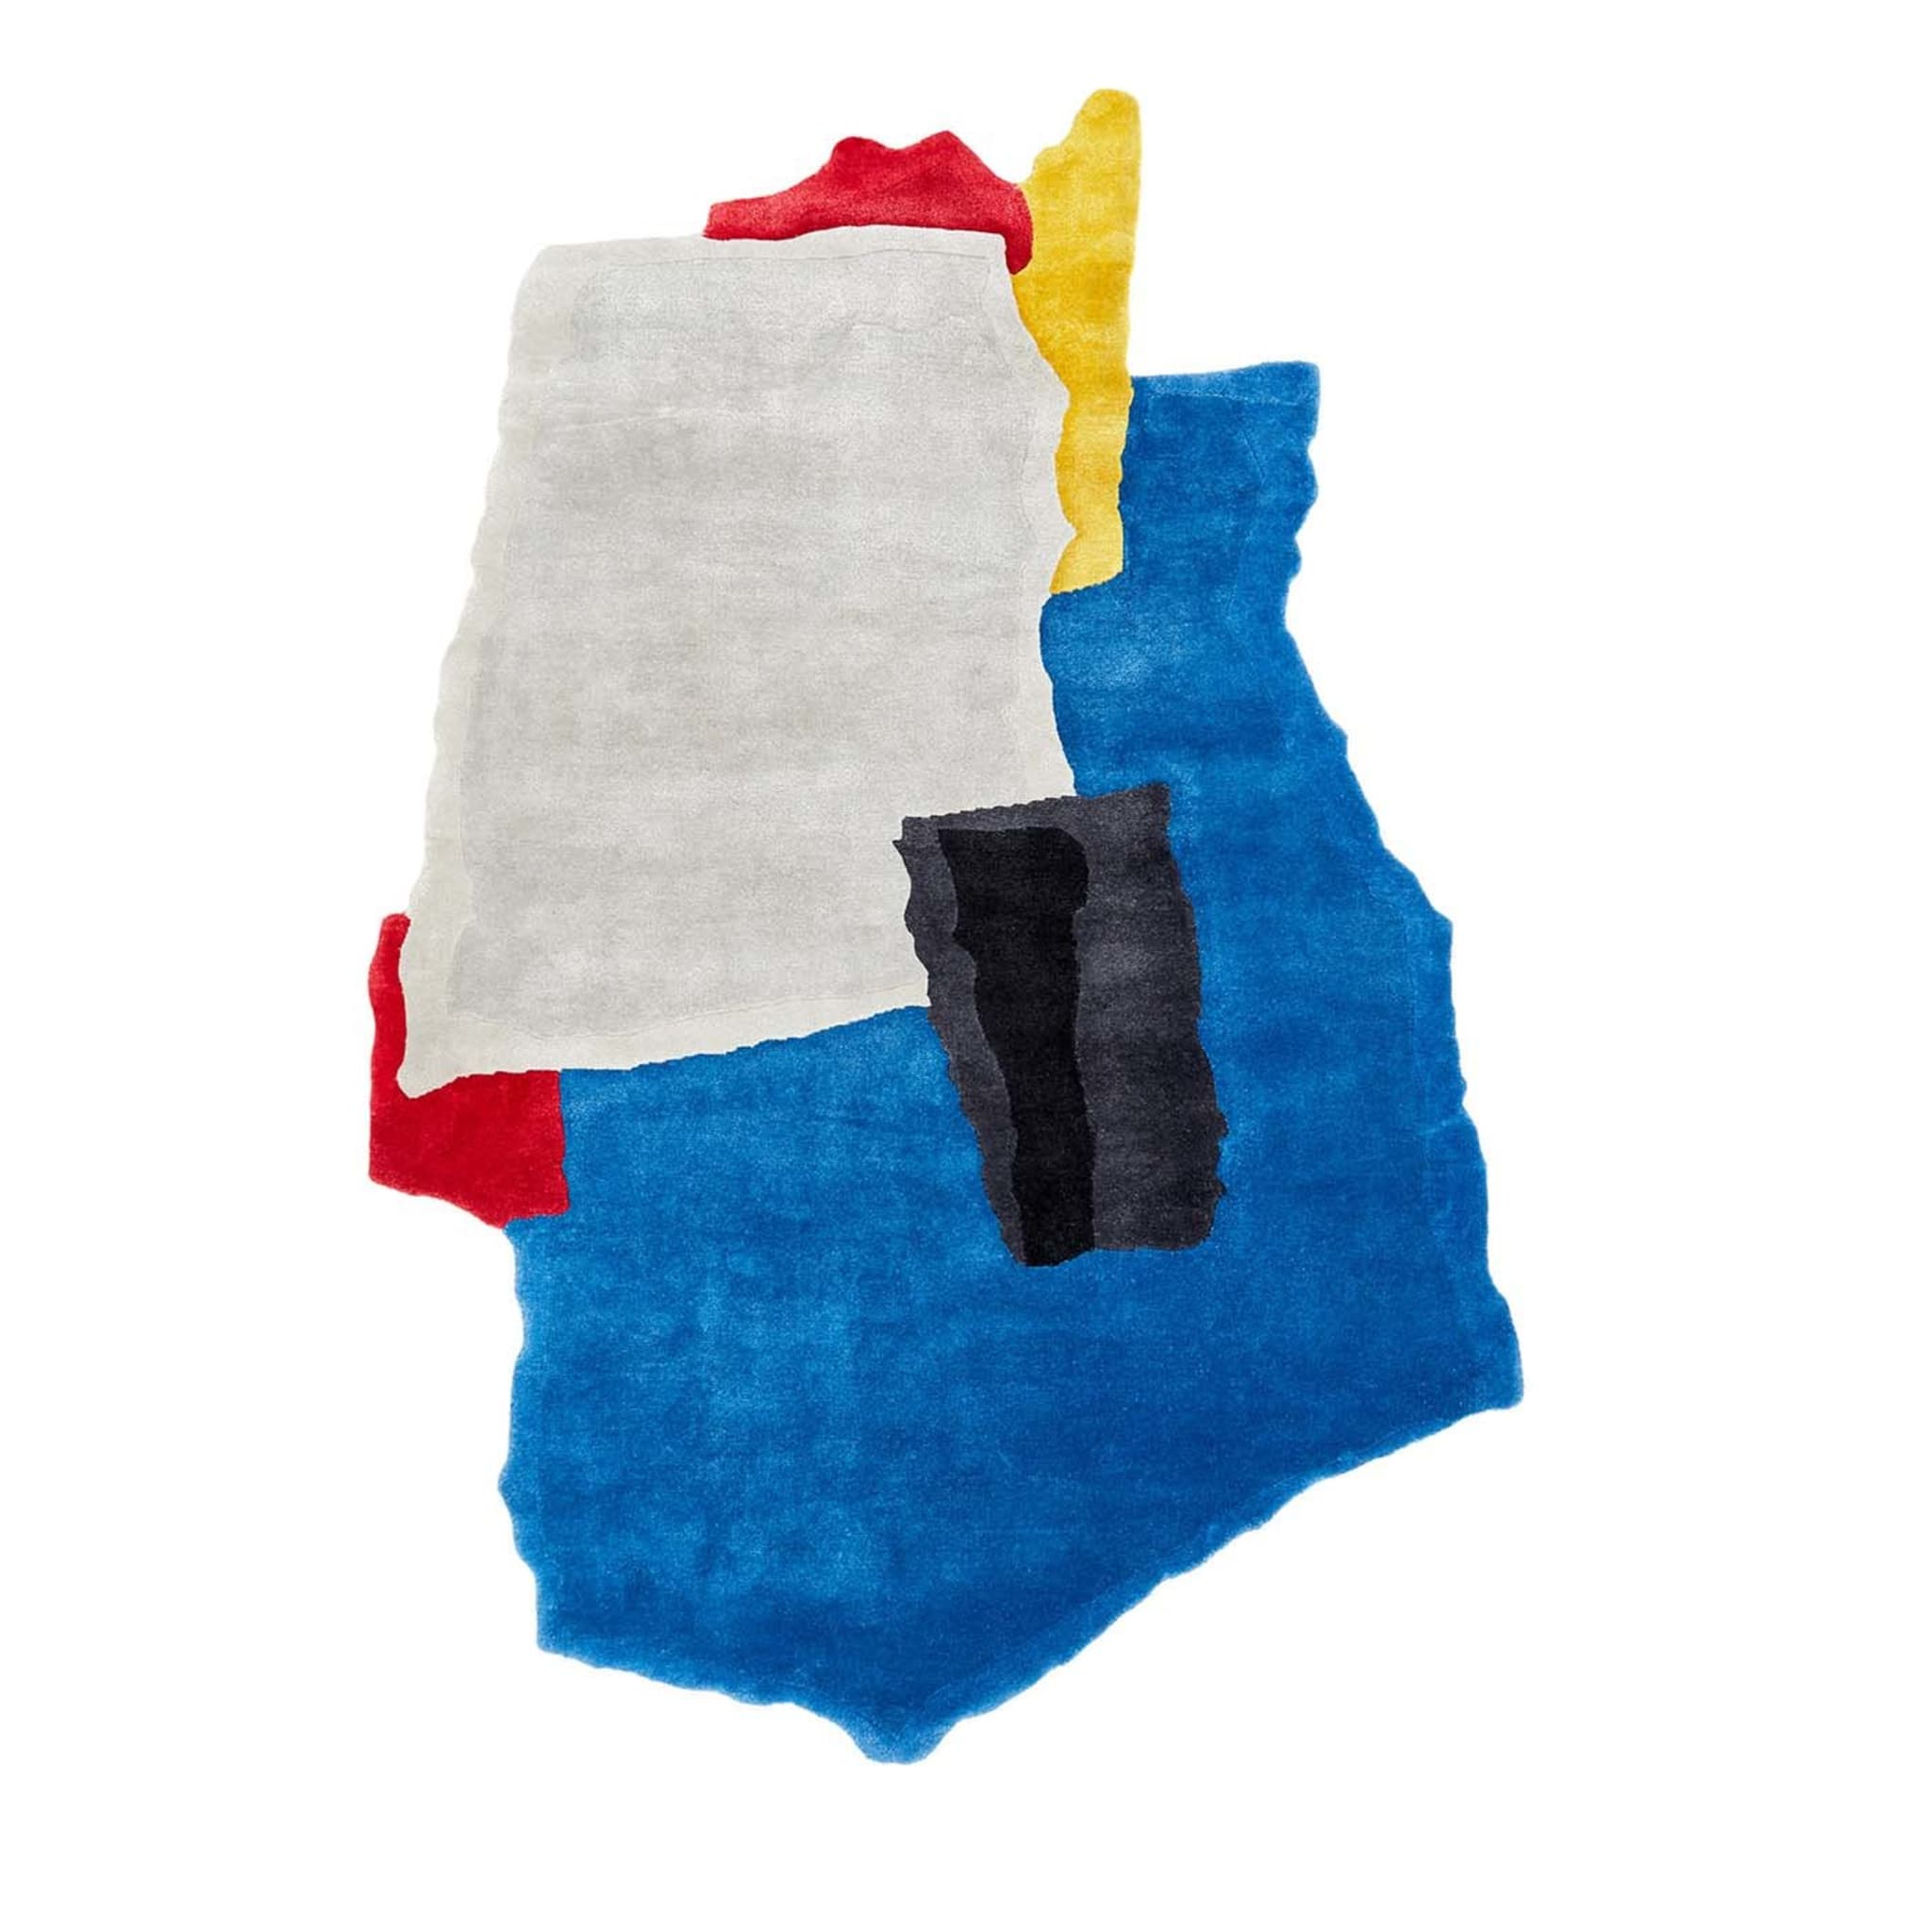 Torn-Look Multicoloured Wool Rug by Joost van Bleiswijk - Limited Edition - Main view